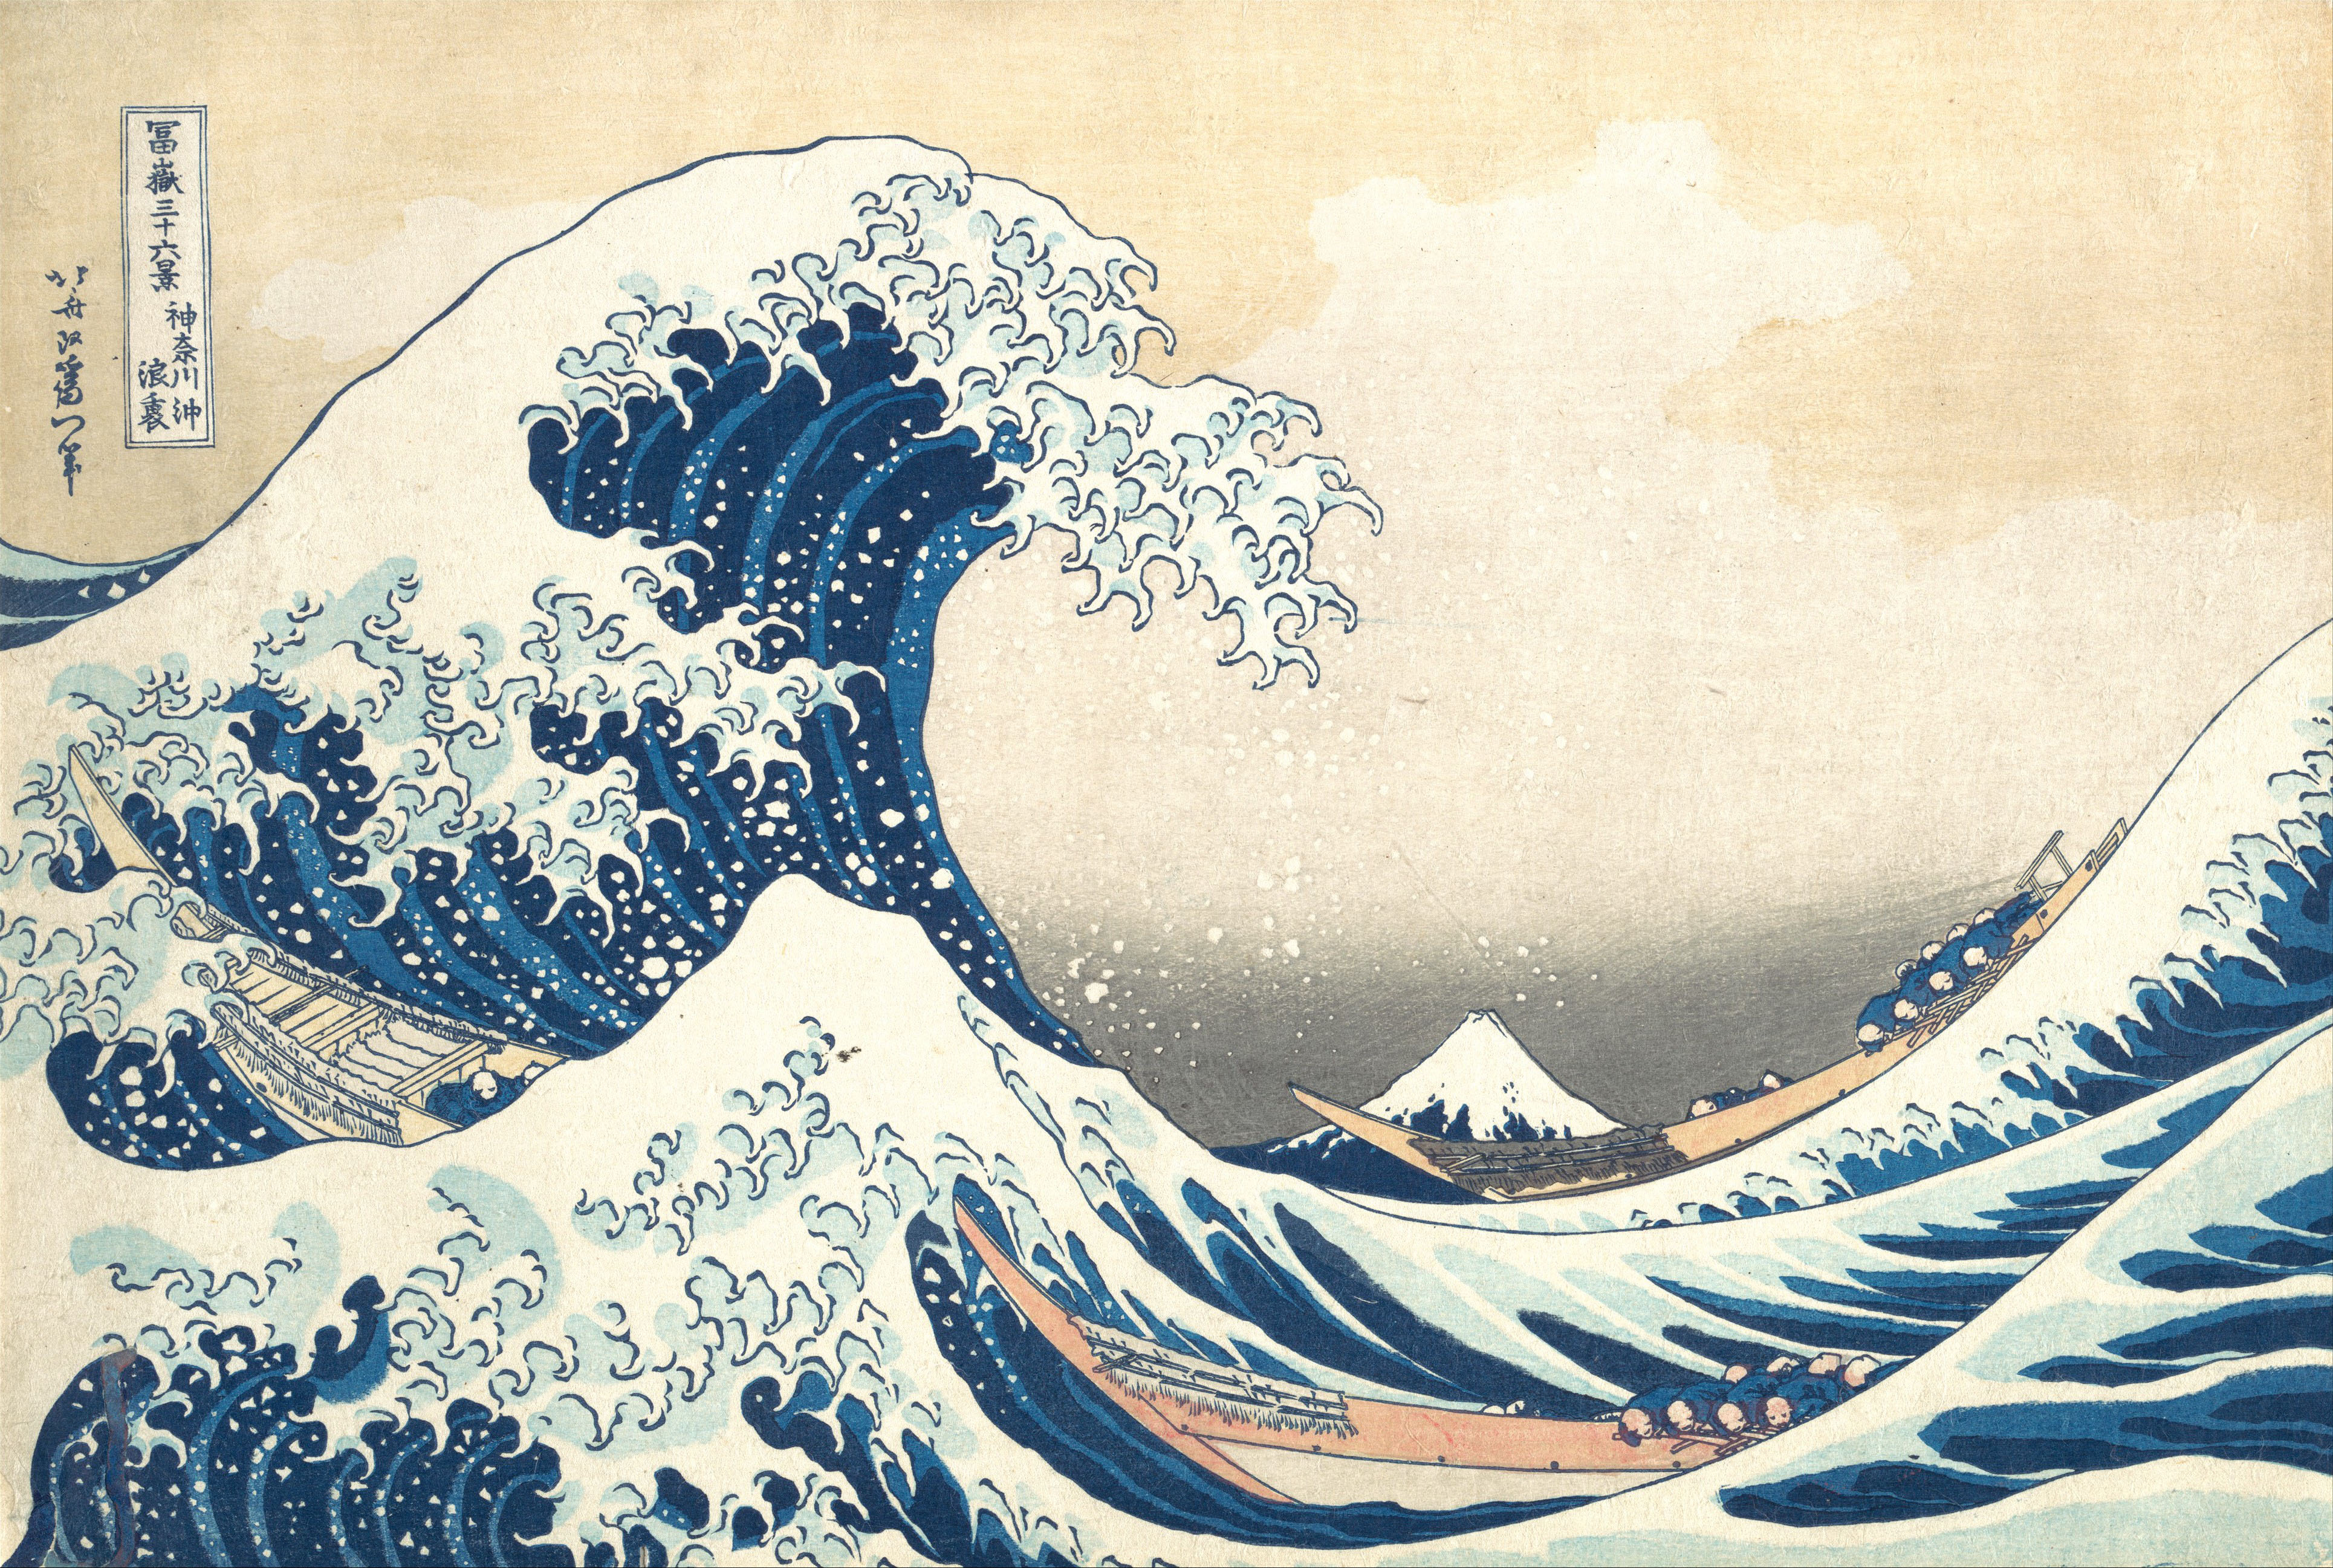 Kanagawa'daki Büyük Dalga by Katsushika Hokusai - c. 1830 - - özel koleksiyon